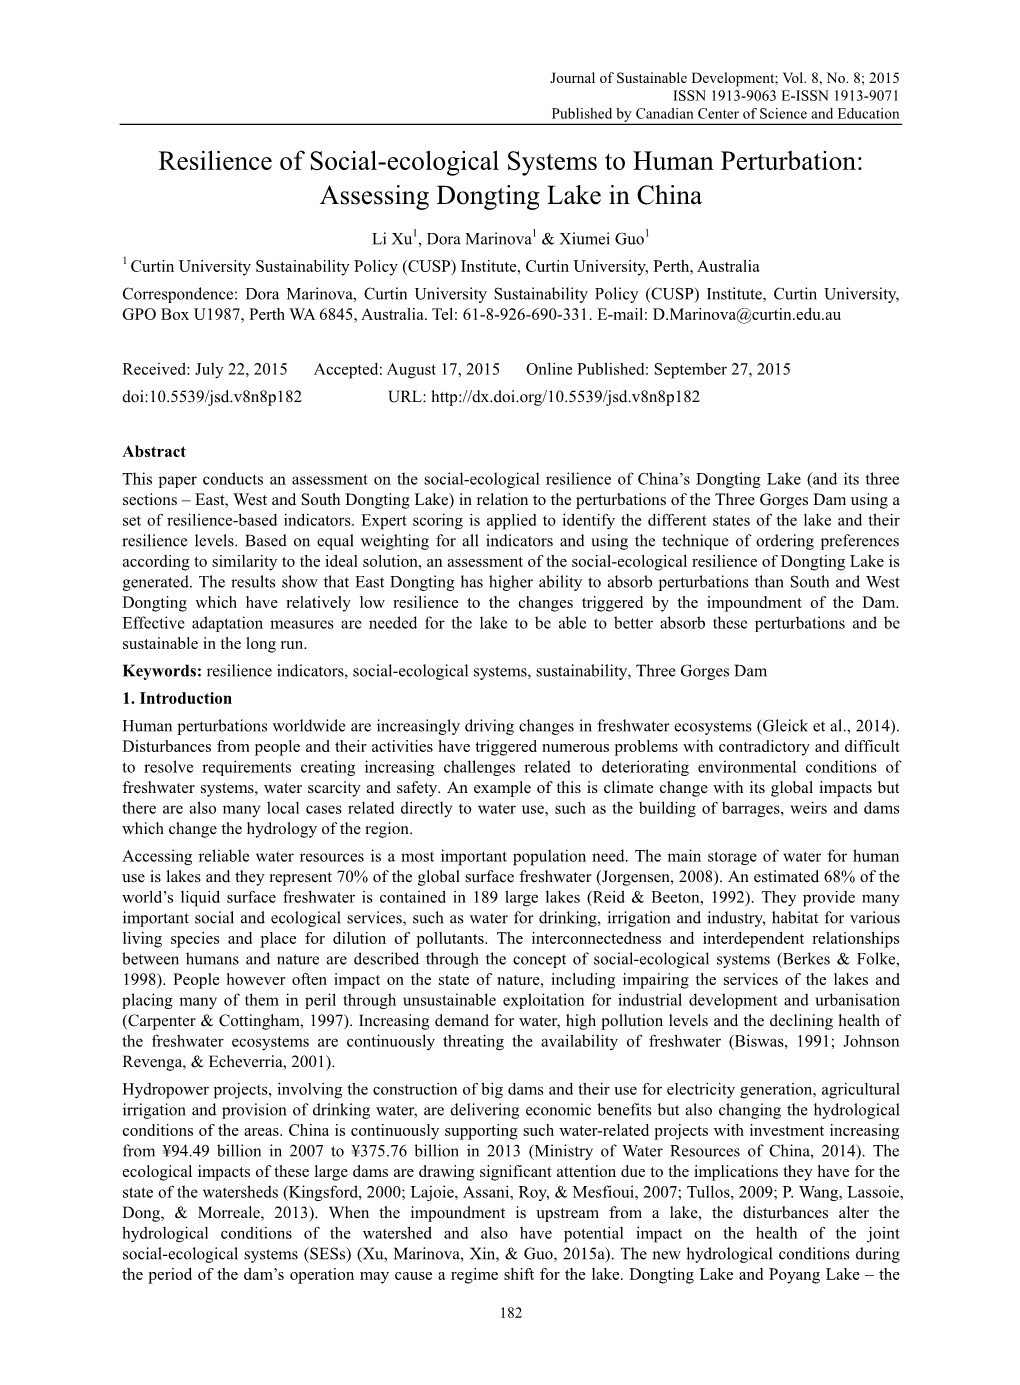 Assessing Dongting Lake in China